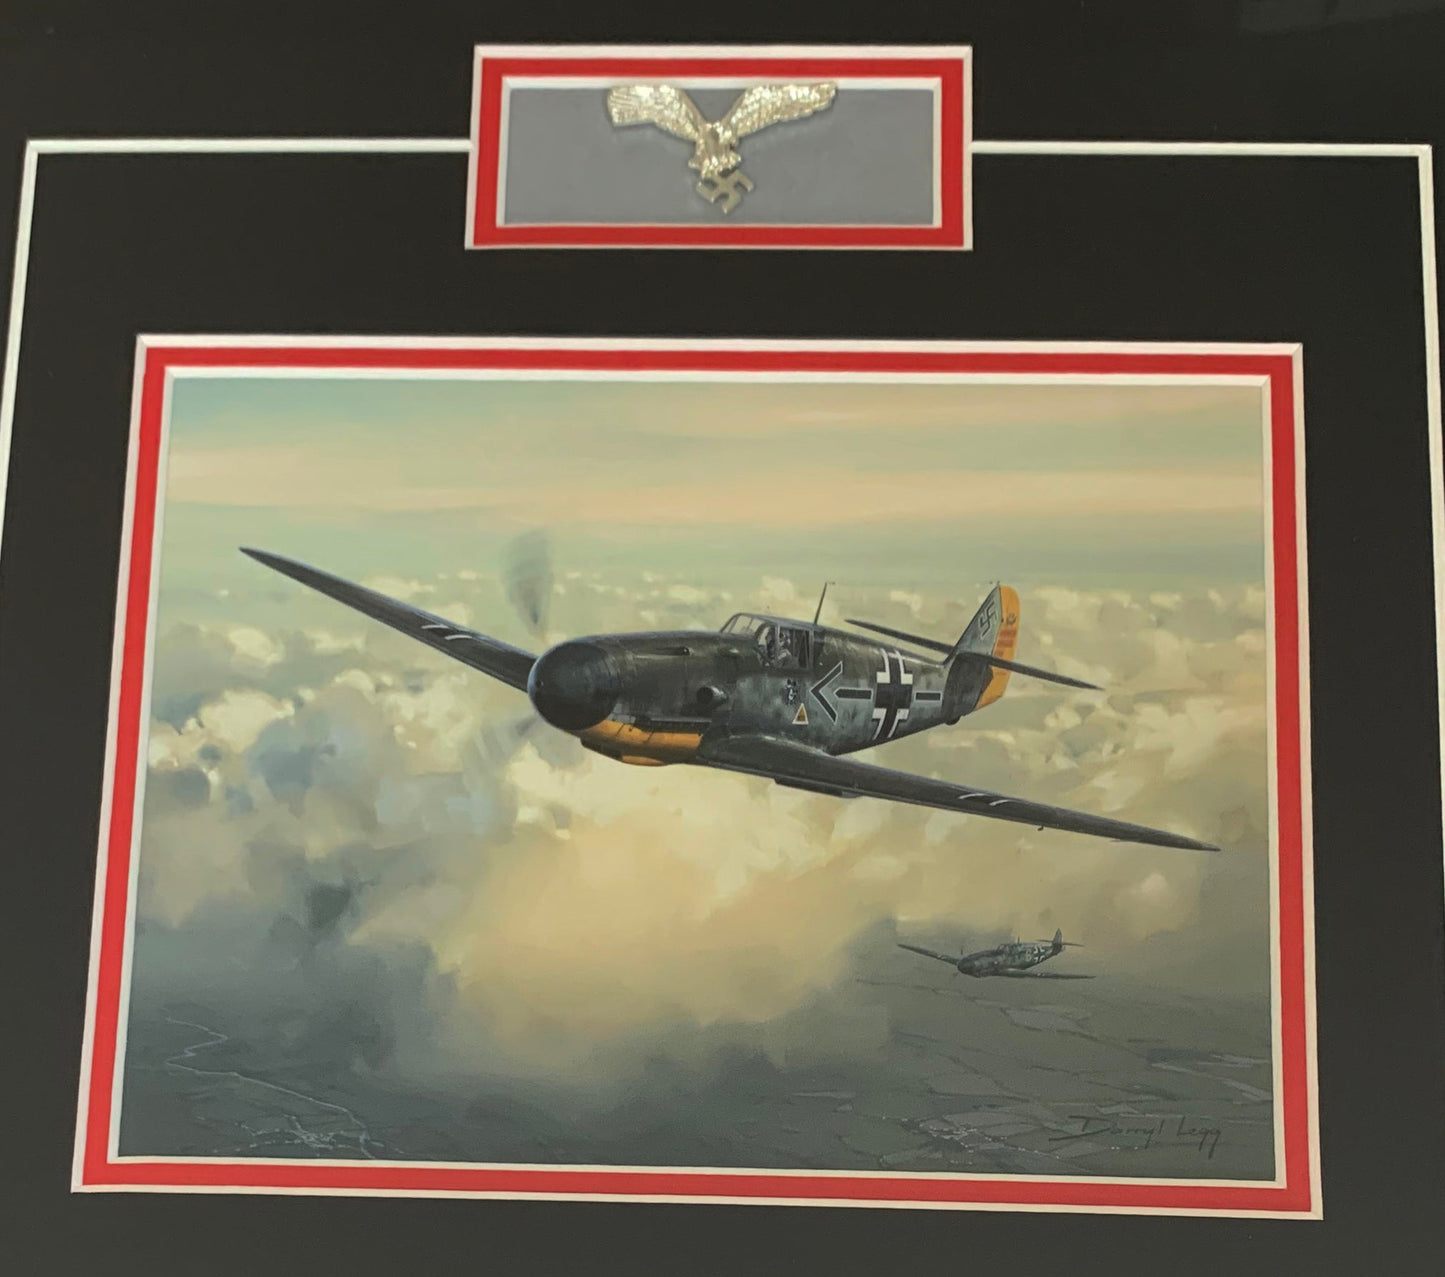 WW2 Luftwaffe Ace Adolf Galland Autographed Original Print Display - Fully Certified